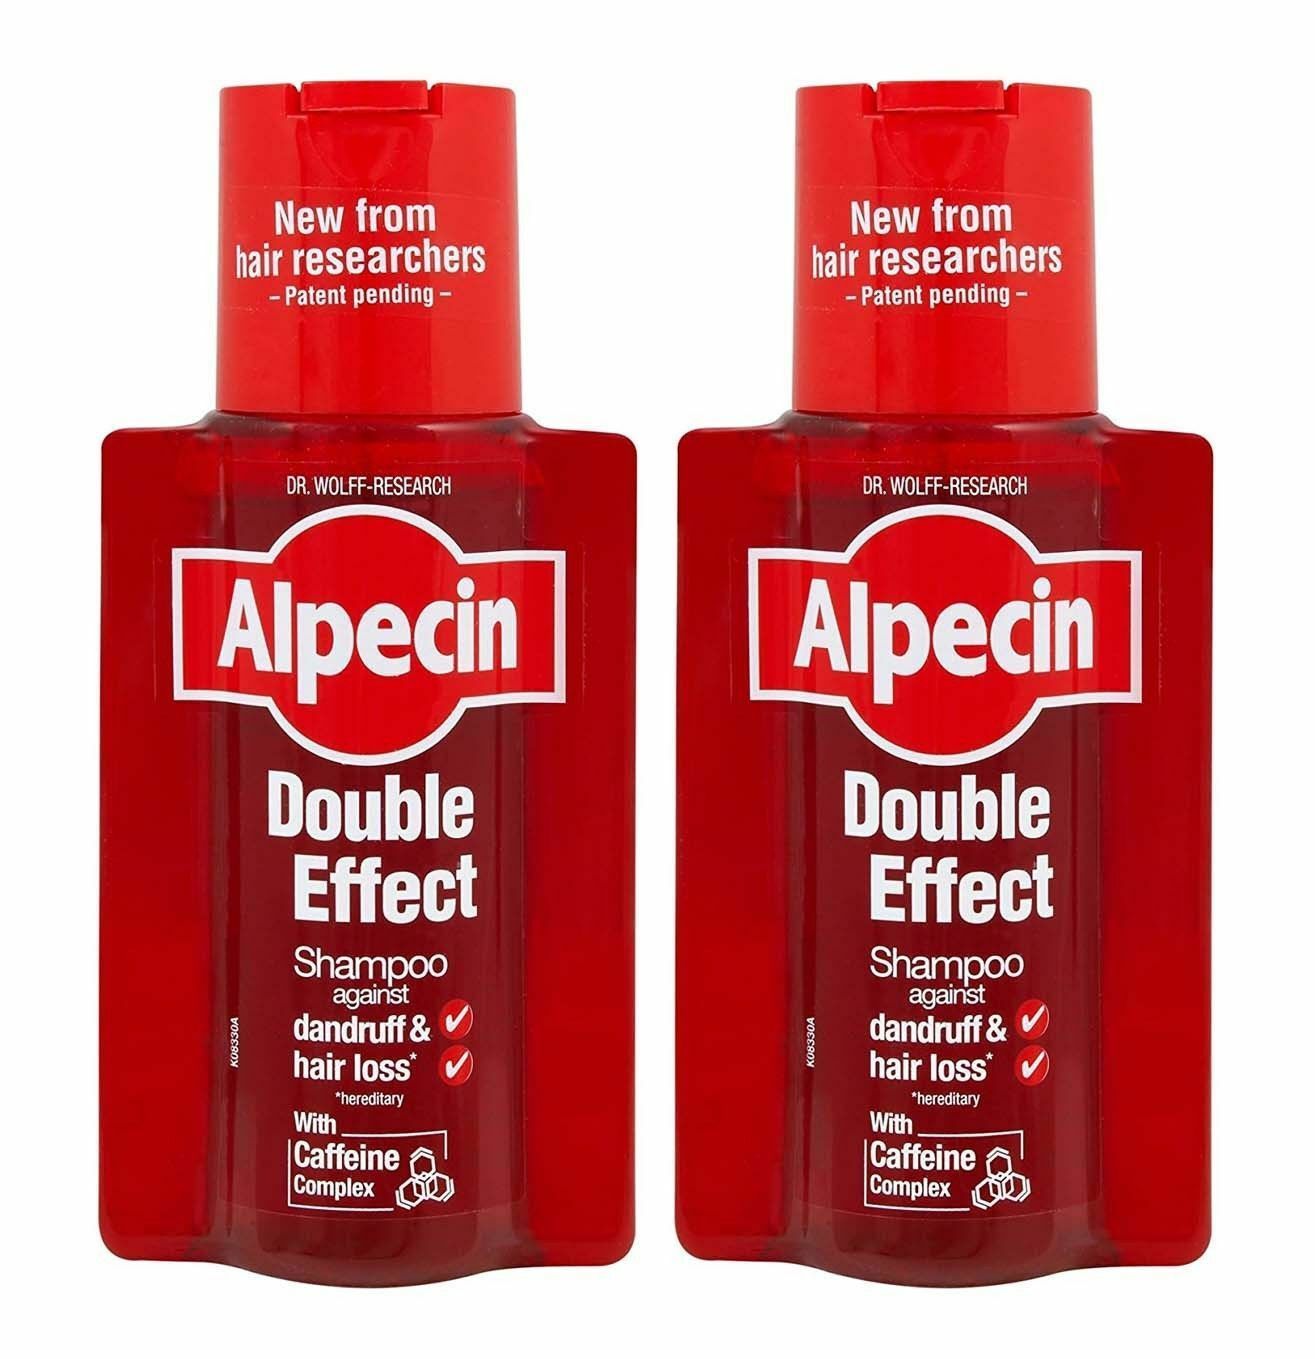 Alpecin Double Effect Shampoo 200ml - Pack of 2